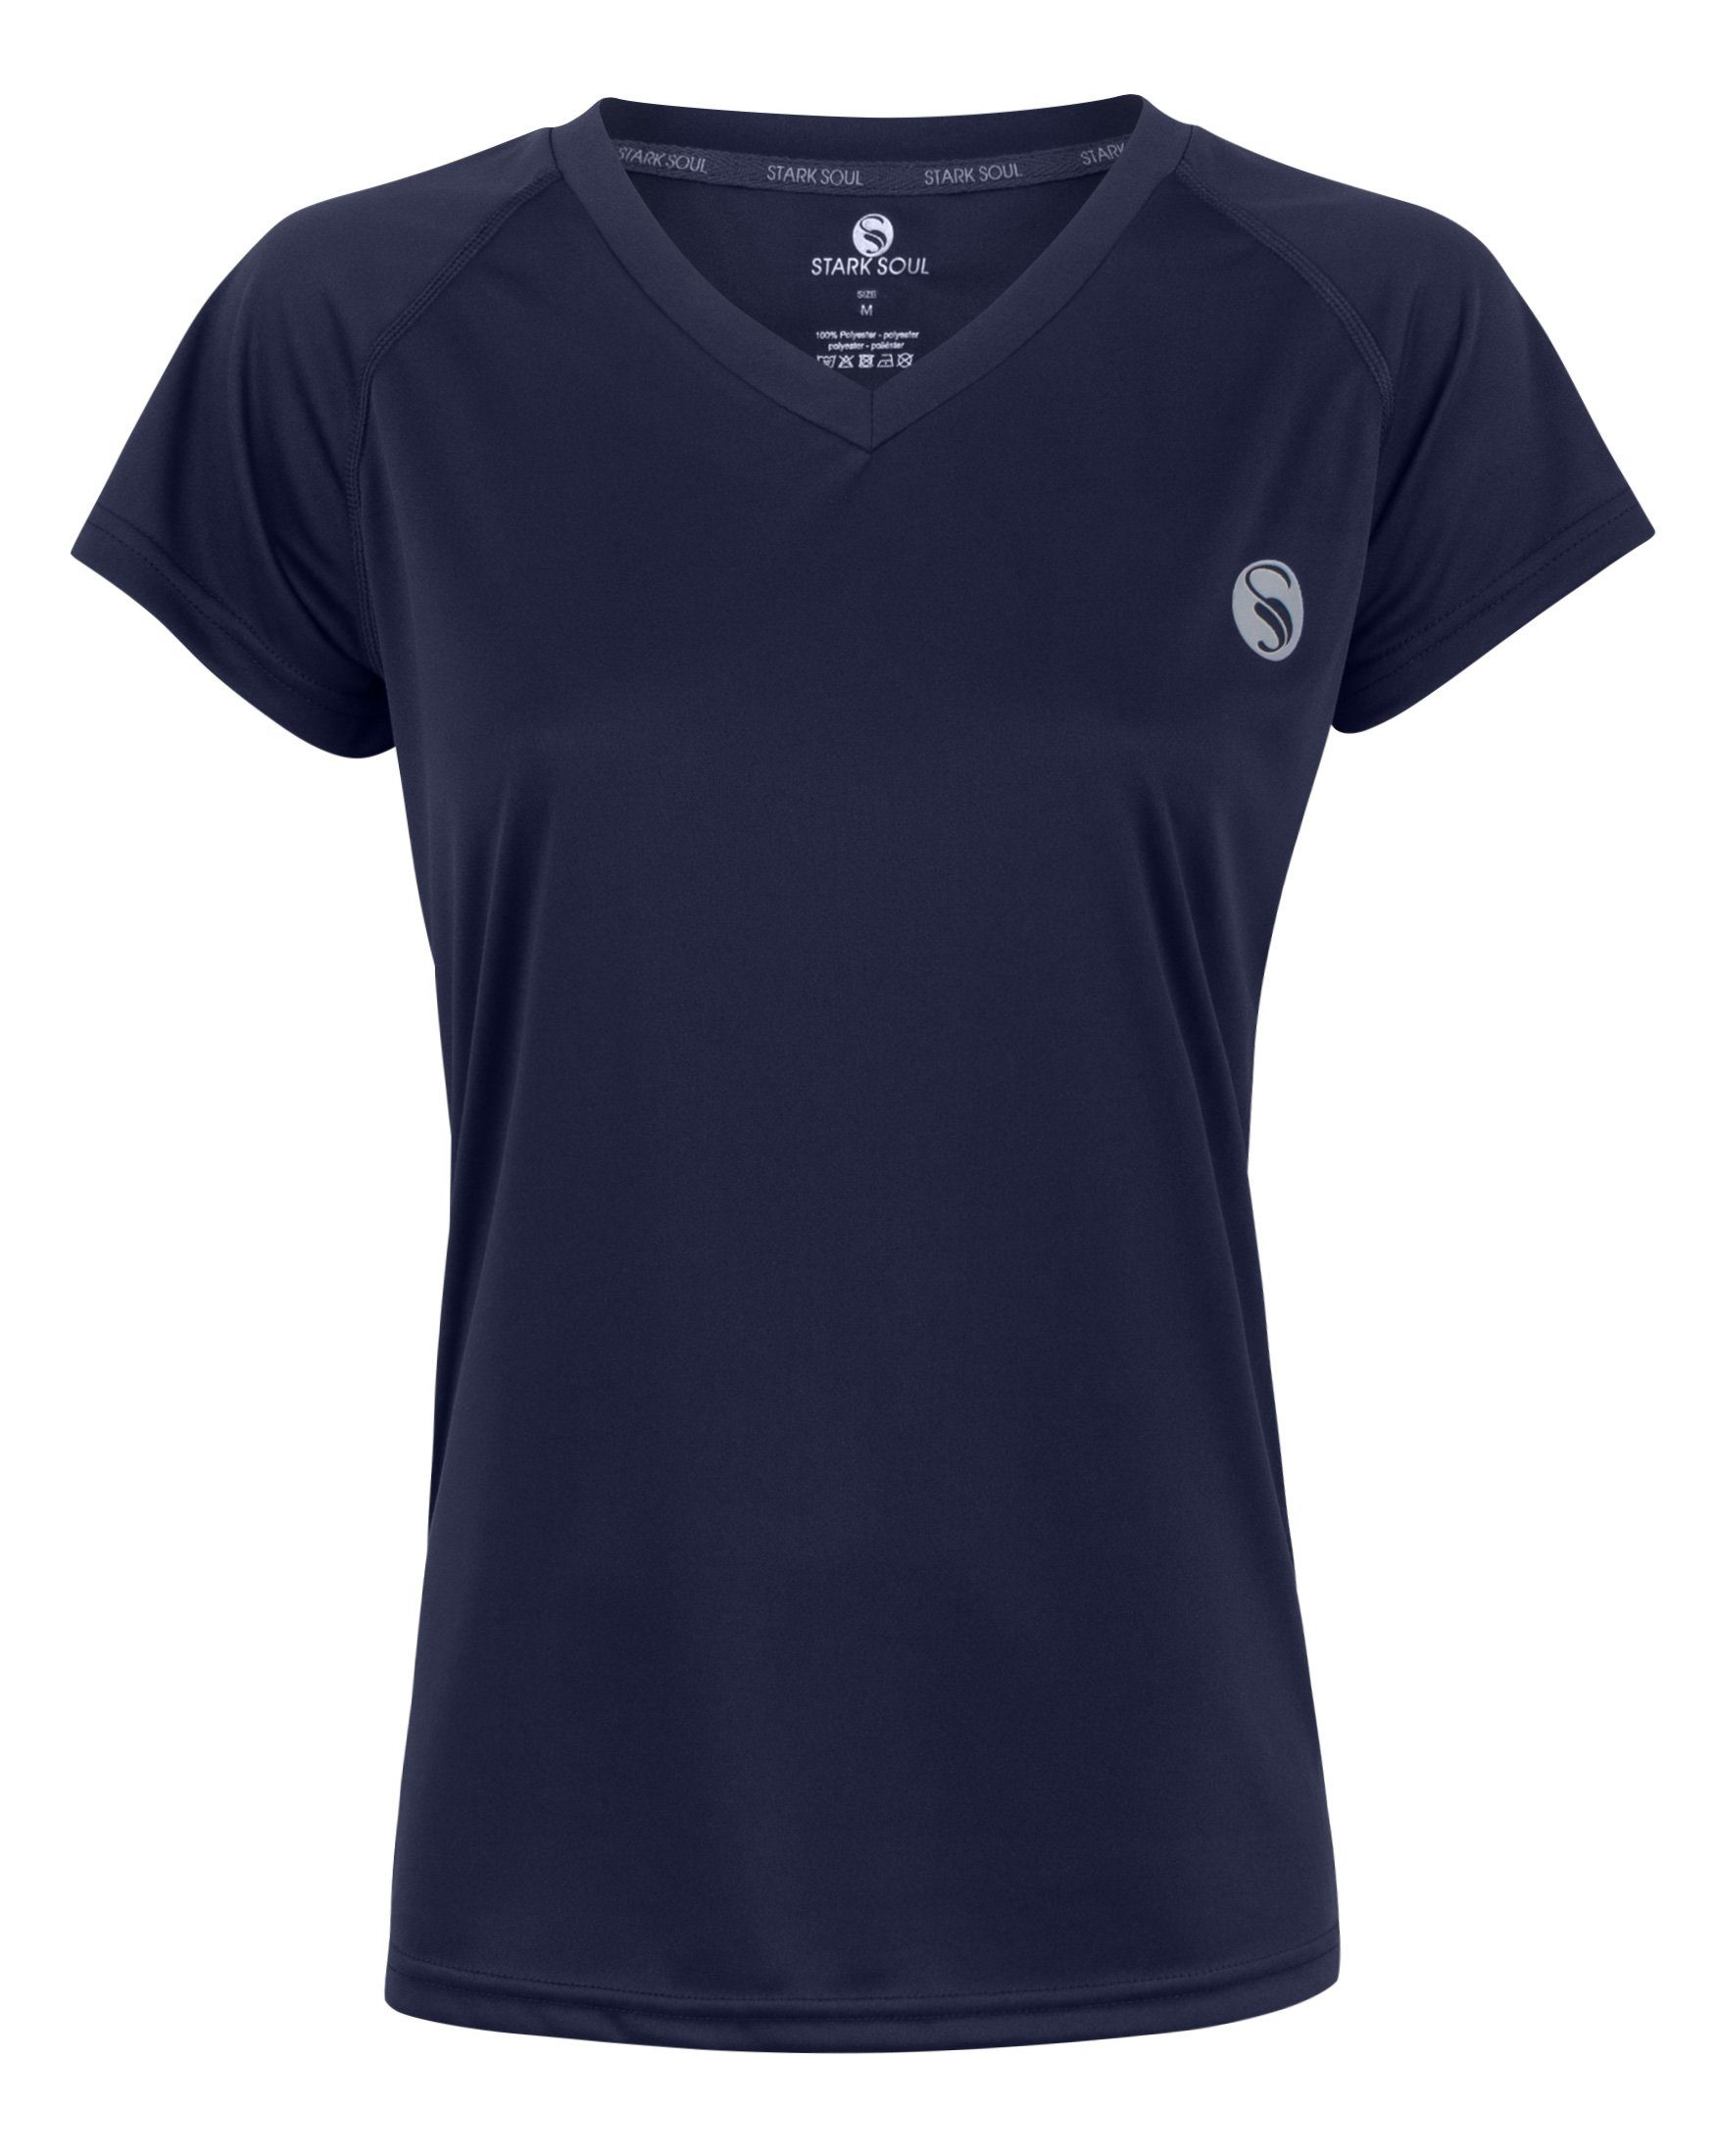 Stark Soul® Sporttop Sport Shirt aus Quick Dry Material - Schnelltrocknend Marineblau | Sporttops